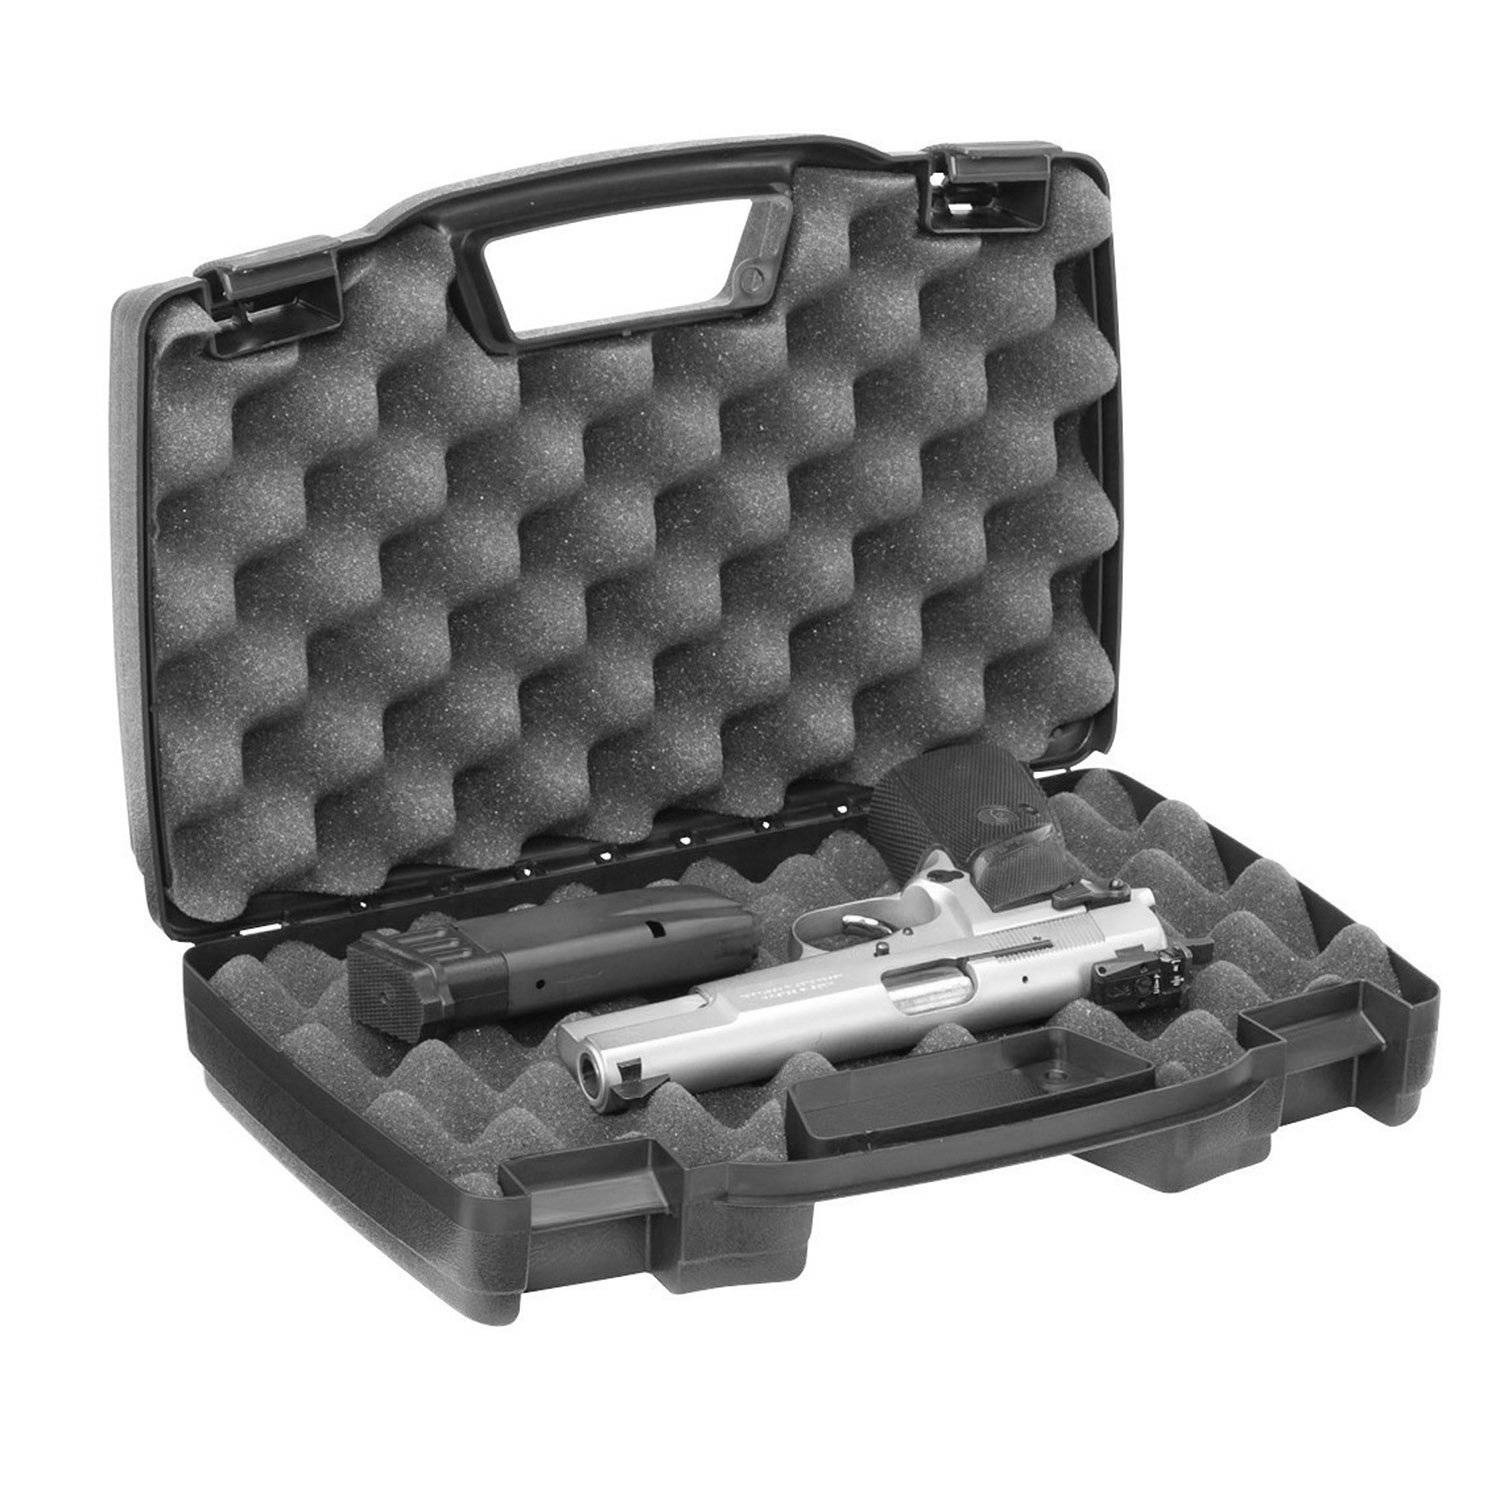 Plano Protector Series Single Pistol Case